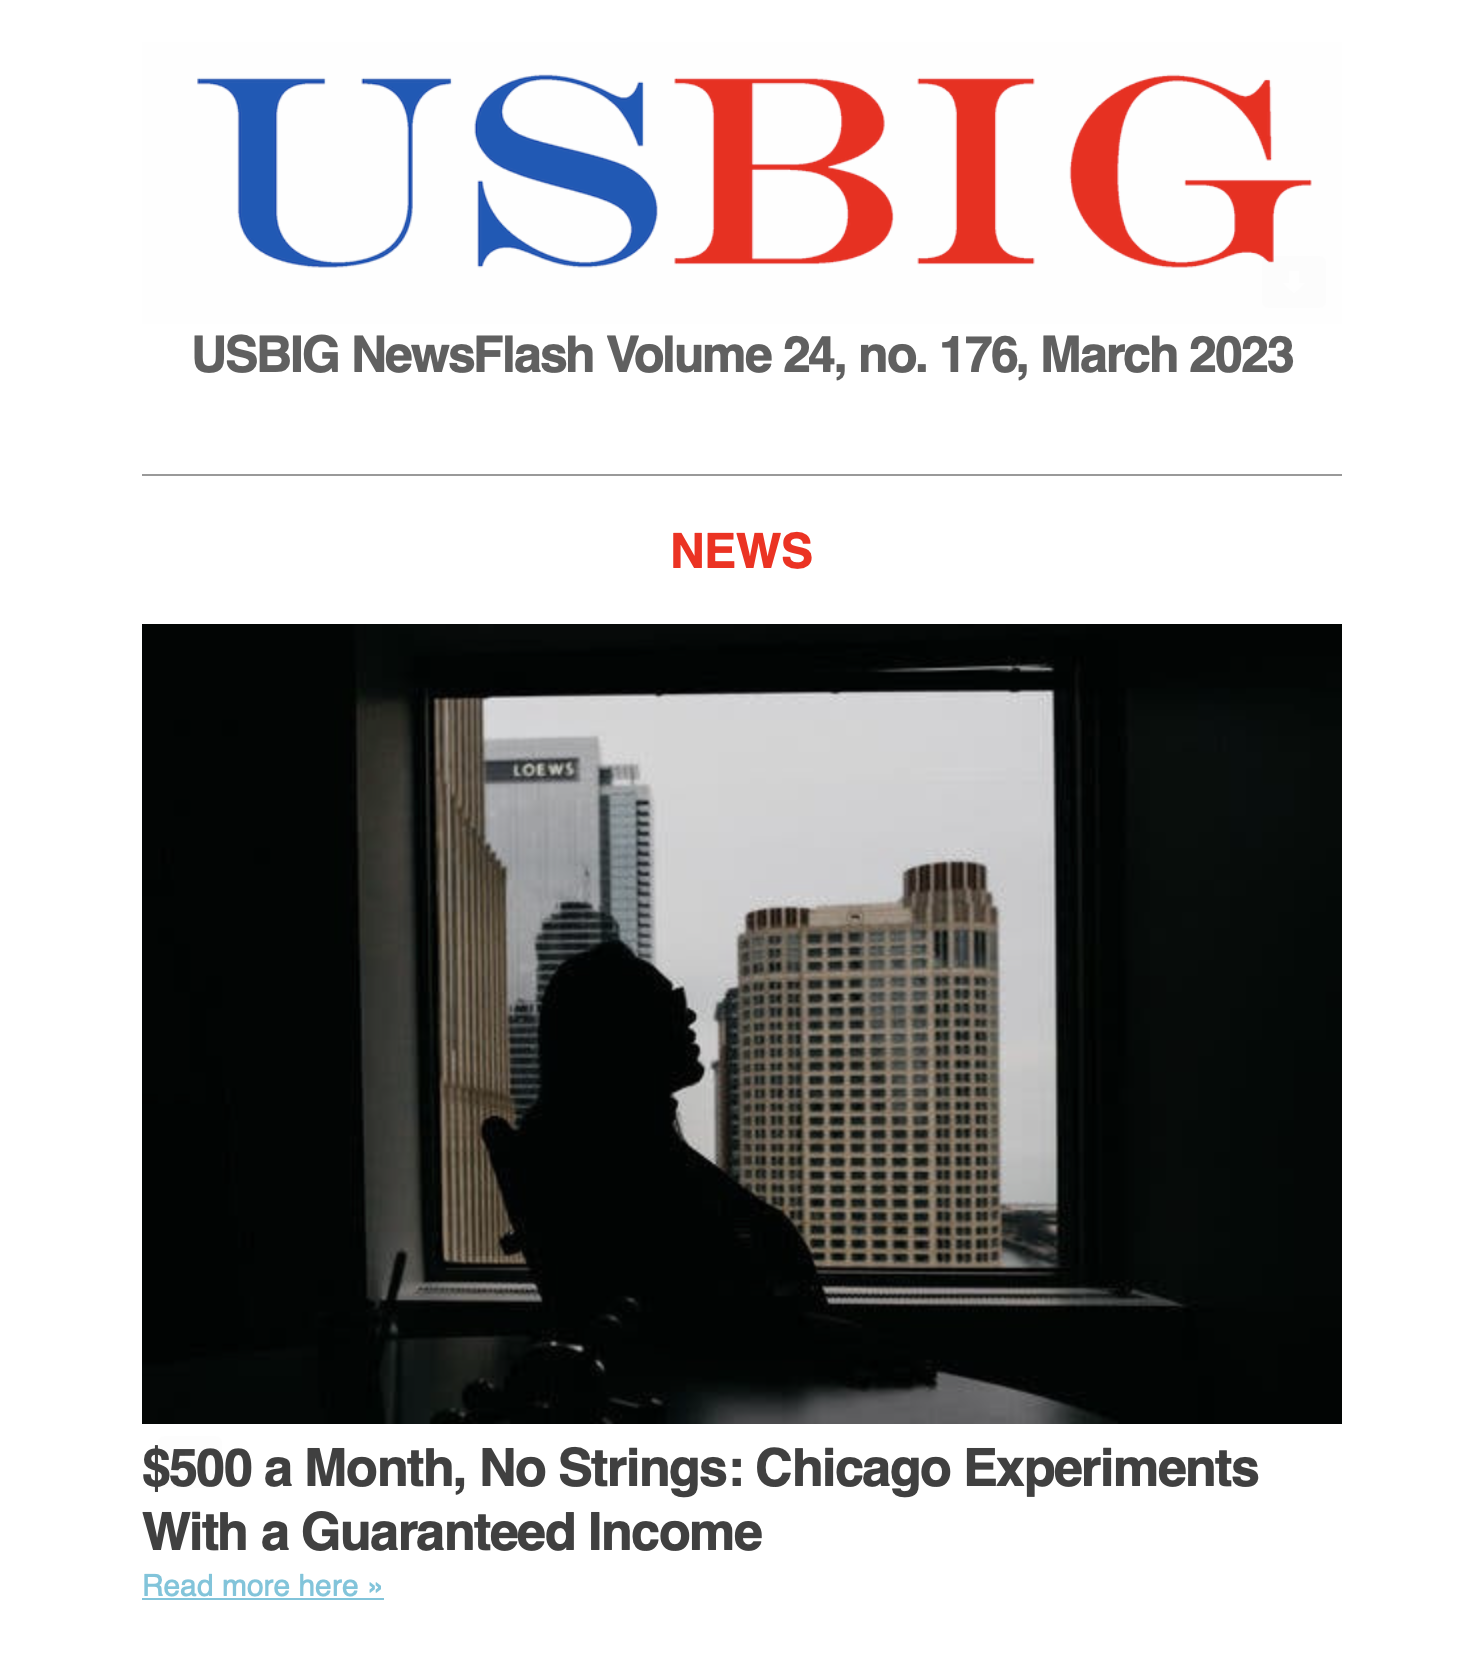 USBIG Newsflash, March 2023